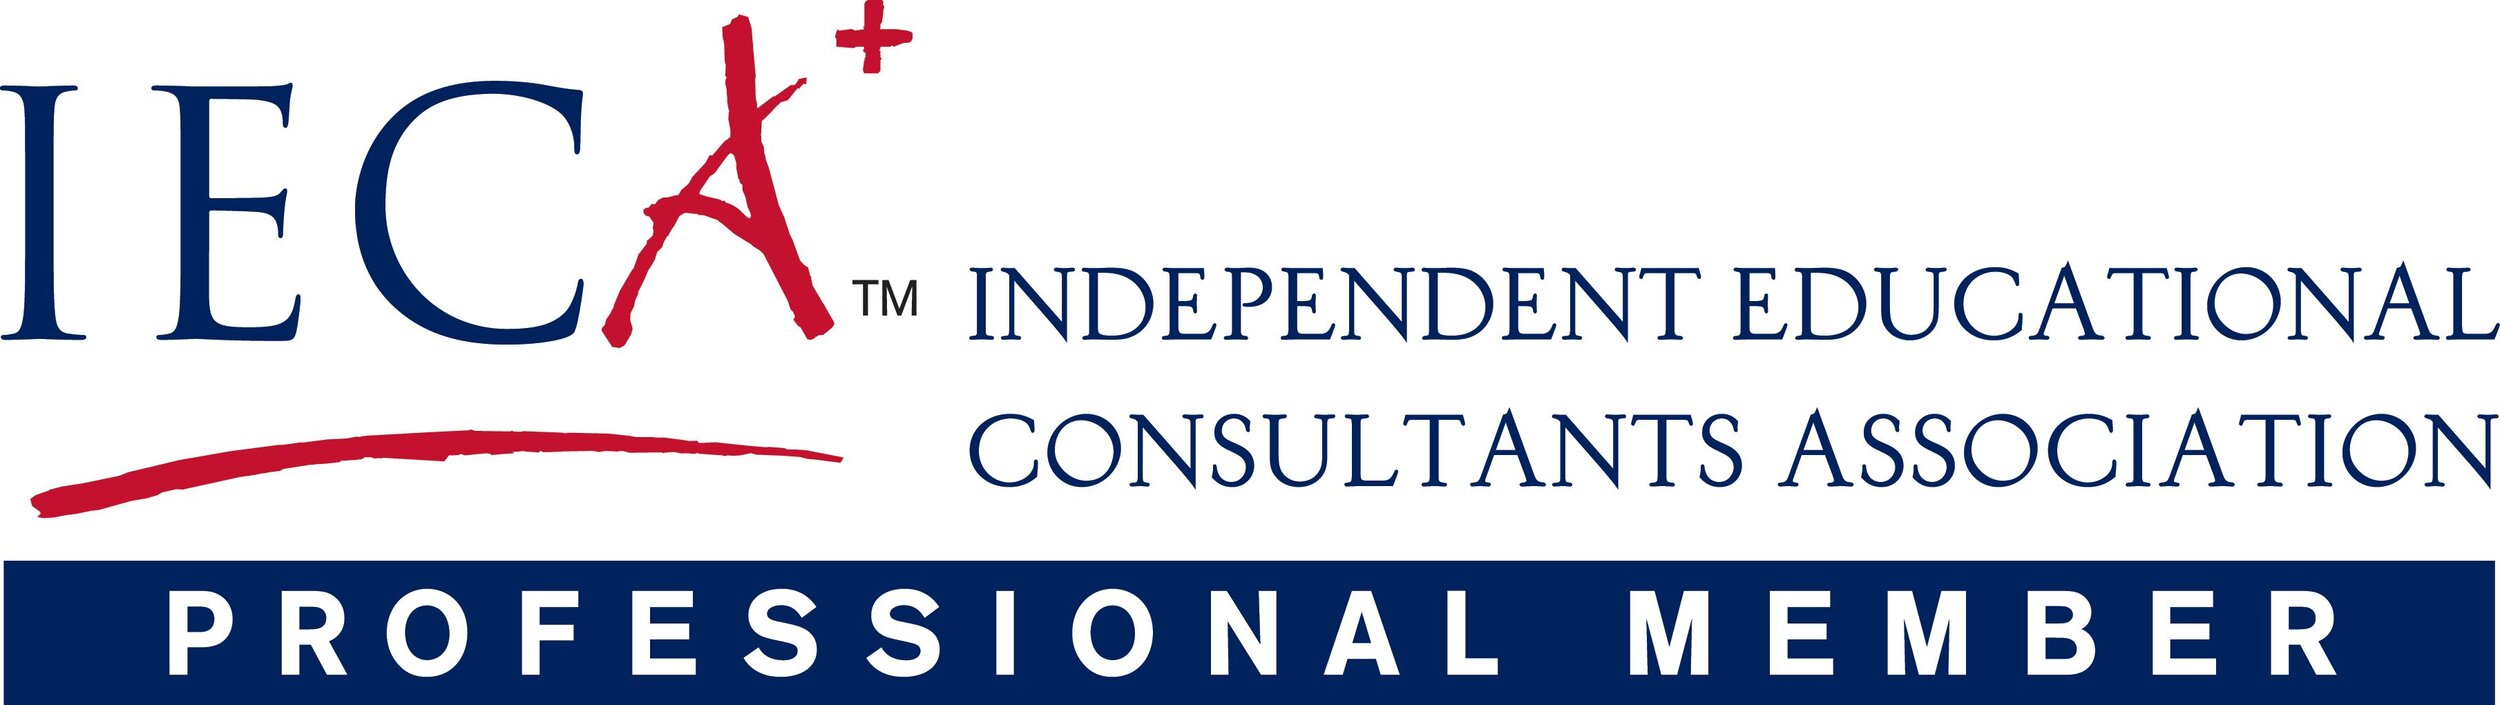 IECA Independent educational consultants association professional member logo.jpeg